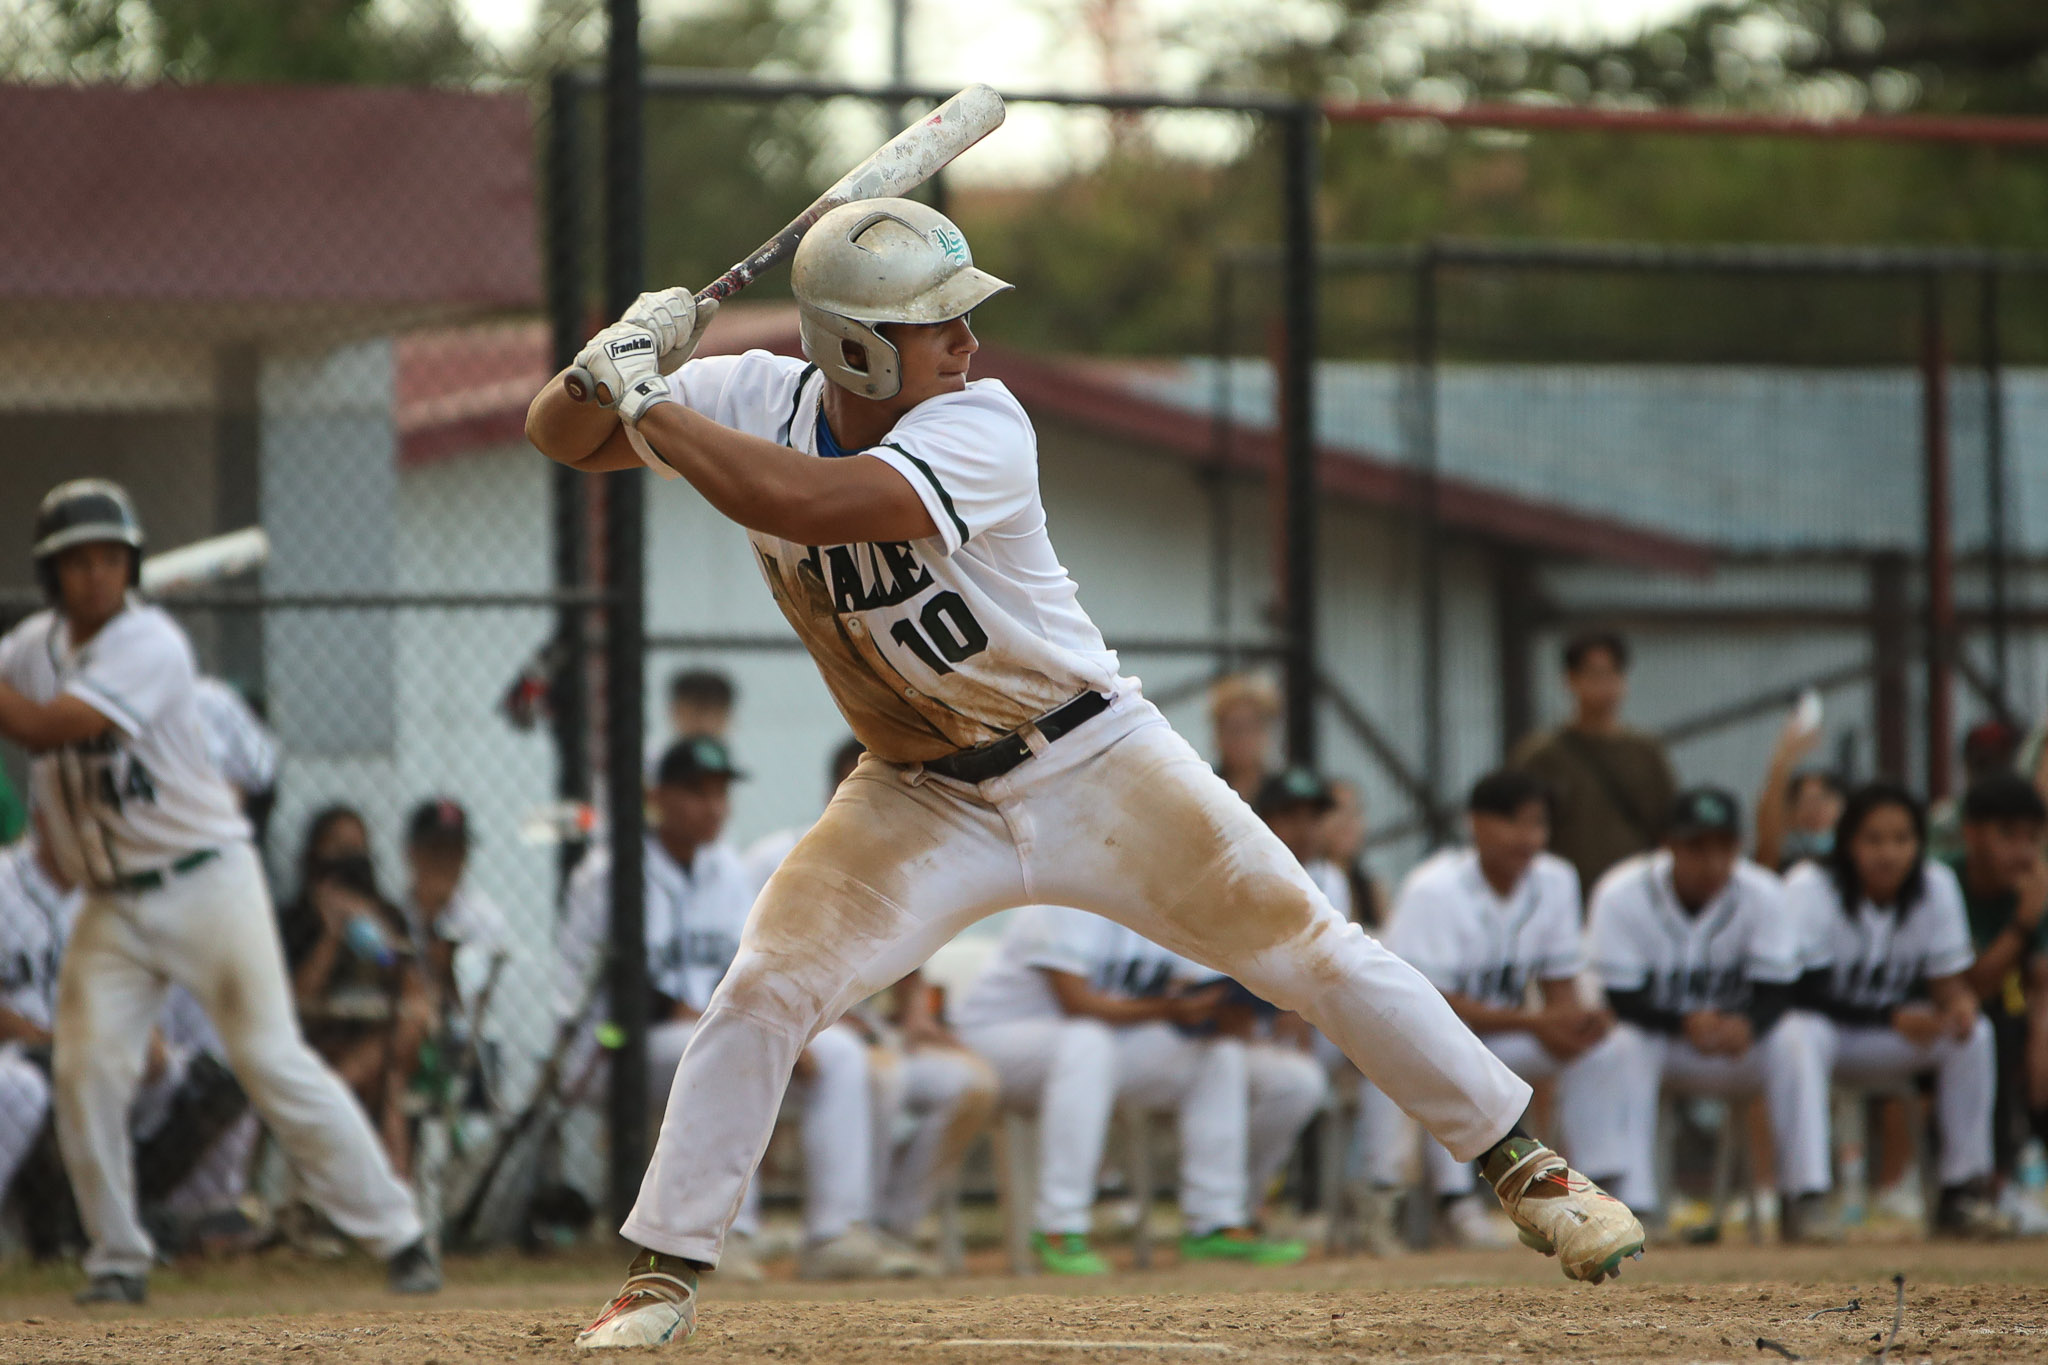 UAAP-85-Baseball-Iggy-Escano-DLSU-7 Iggy Escaño on DLSU return: 'I didn't say goodbye to the game the way I wanted to' Baseball DLSU News UAAP  - philippine sports news